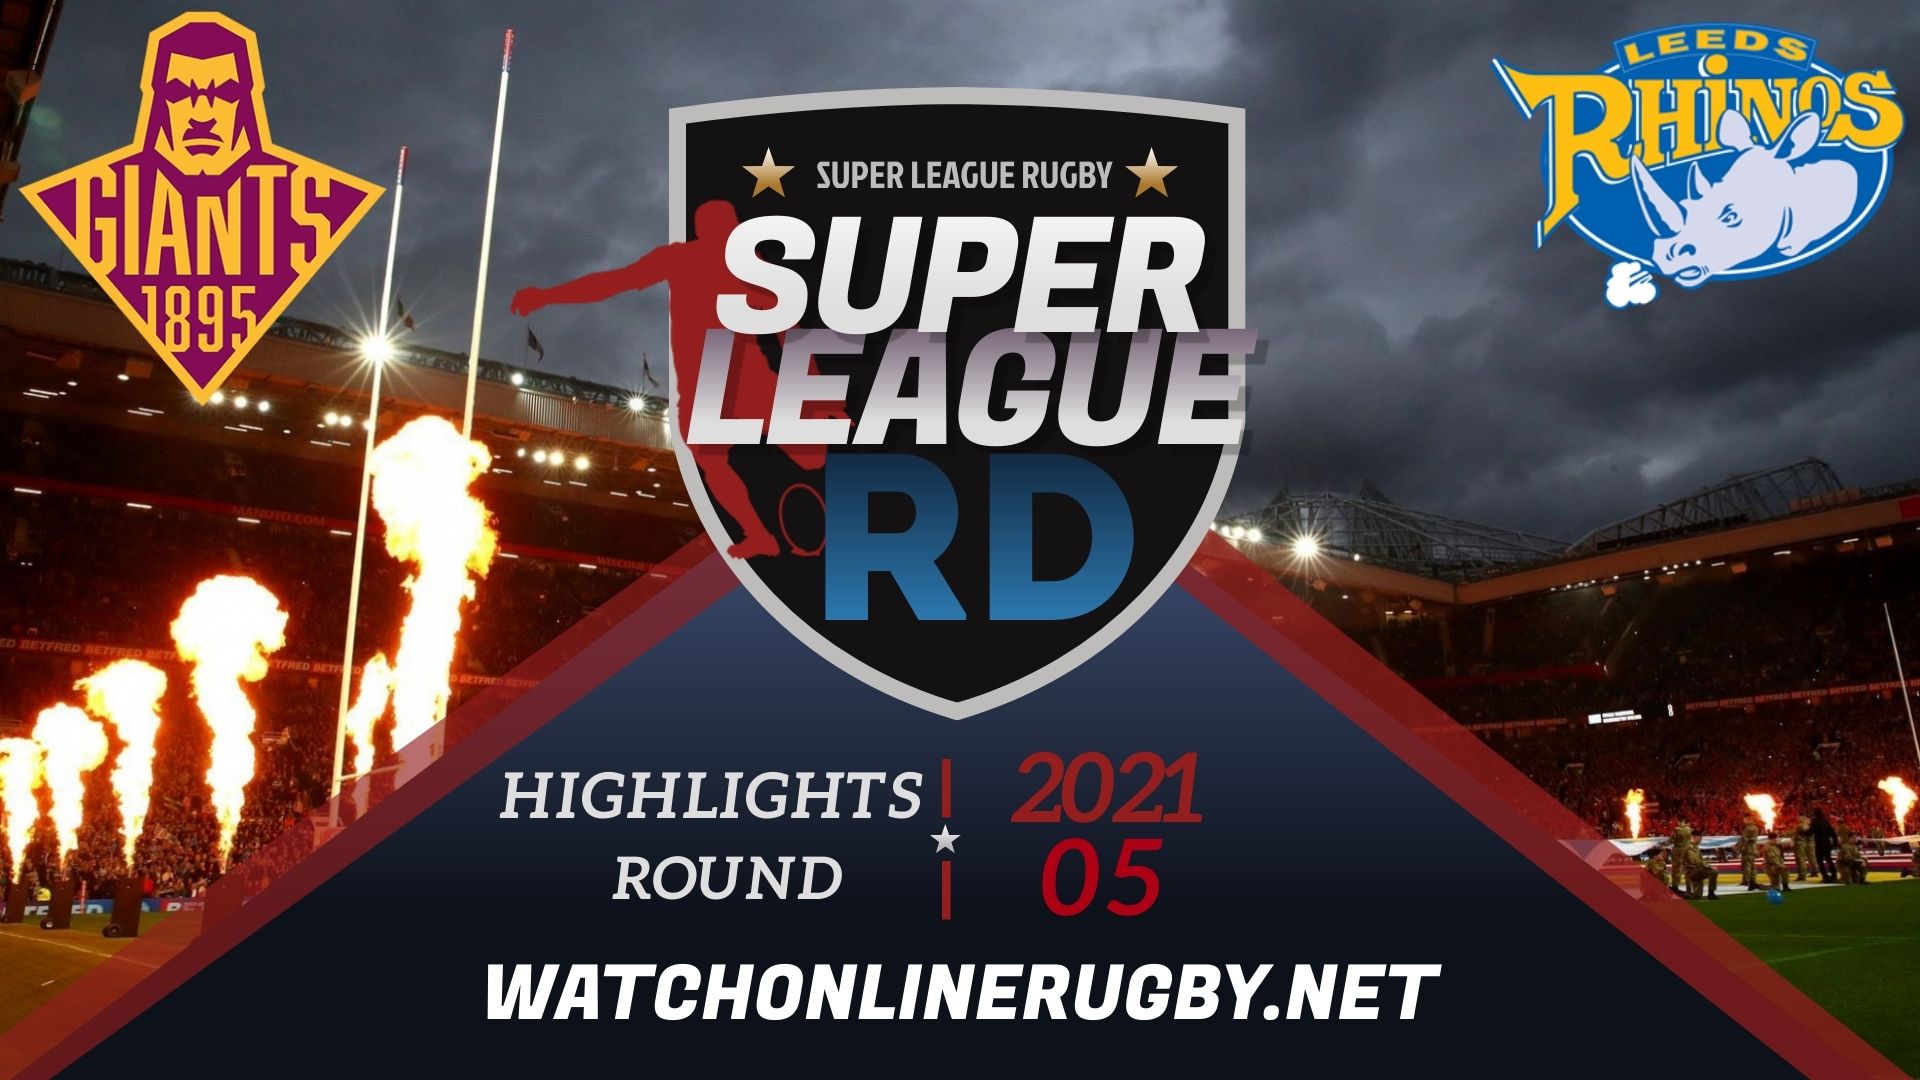 Huddersfield Giants Vs Leeds Rhinos Super League Rugby 2021 RD 5